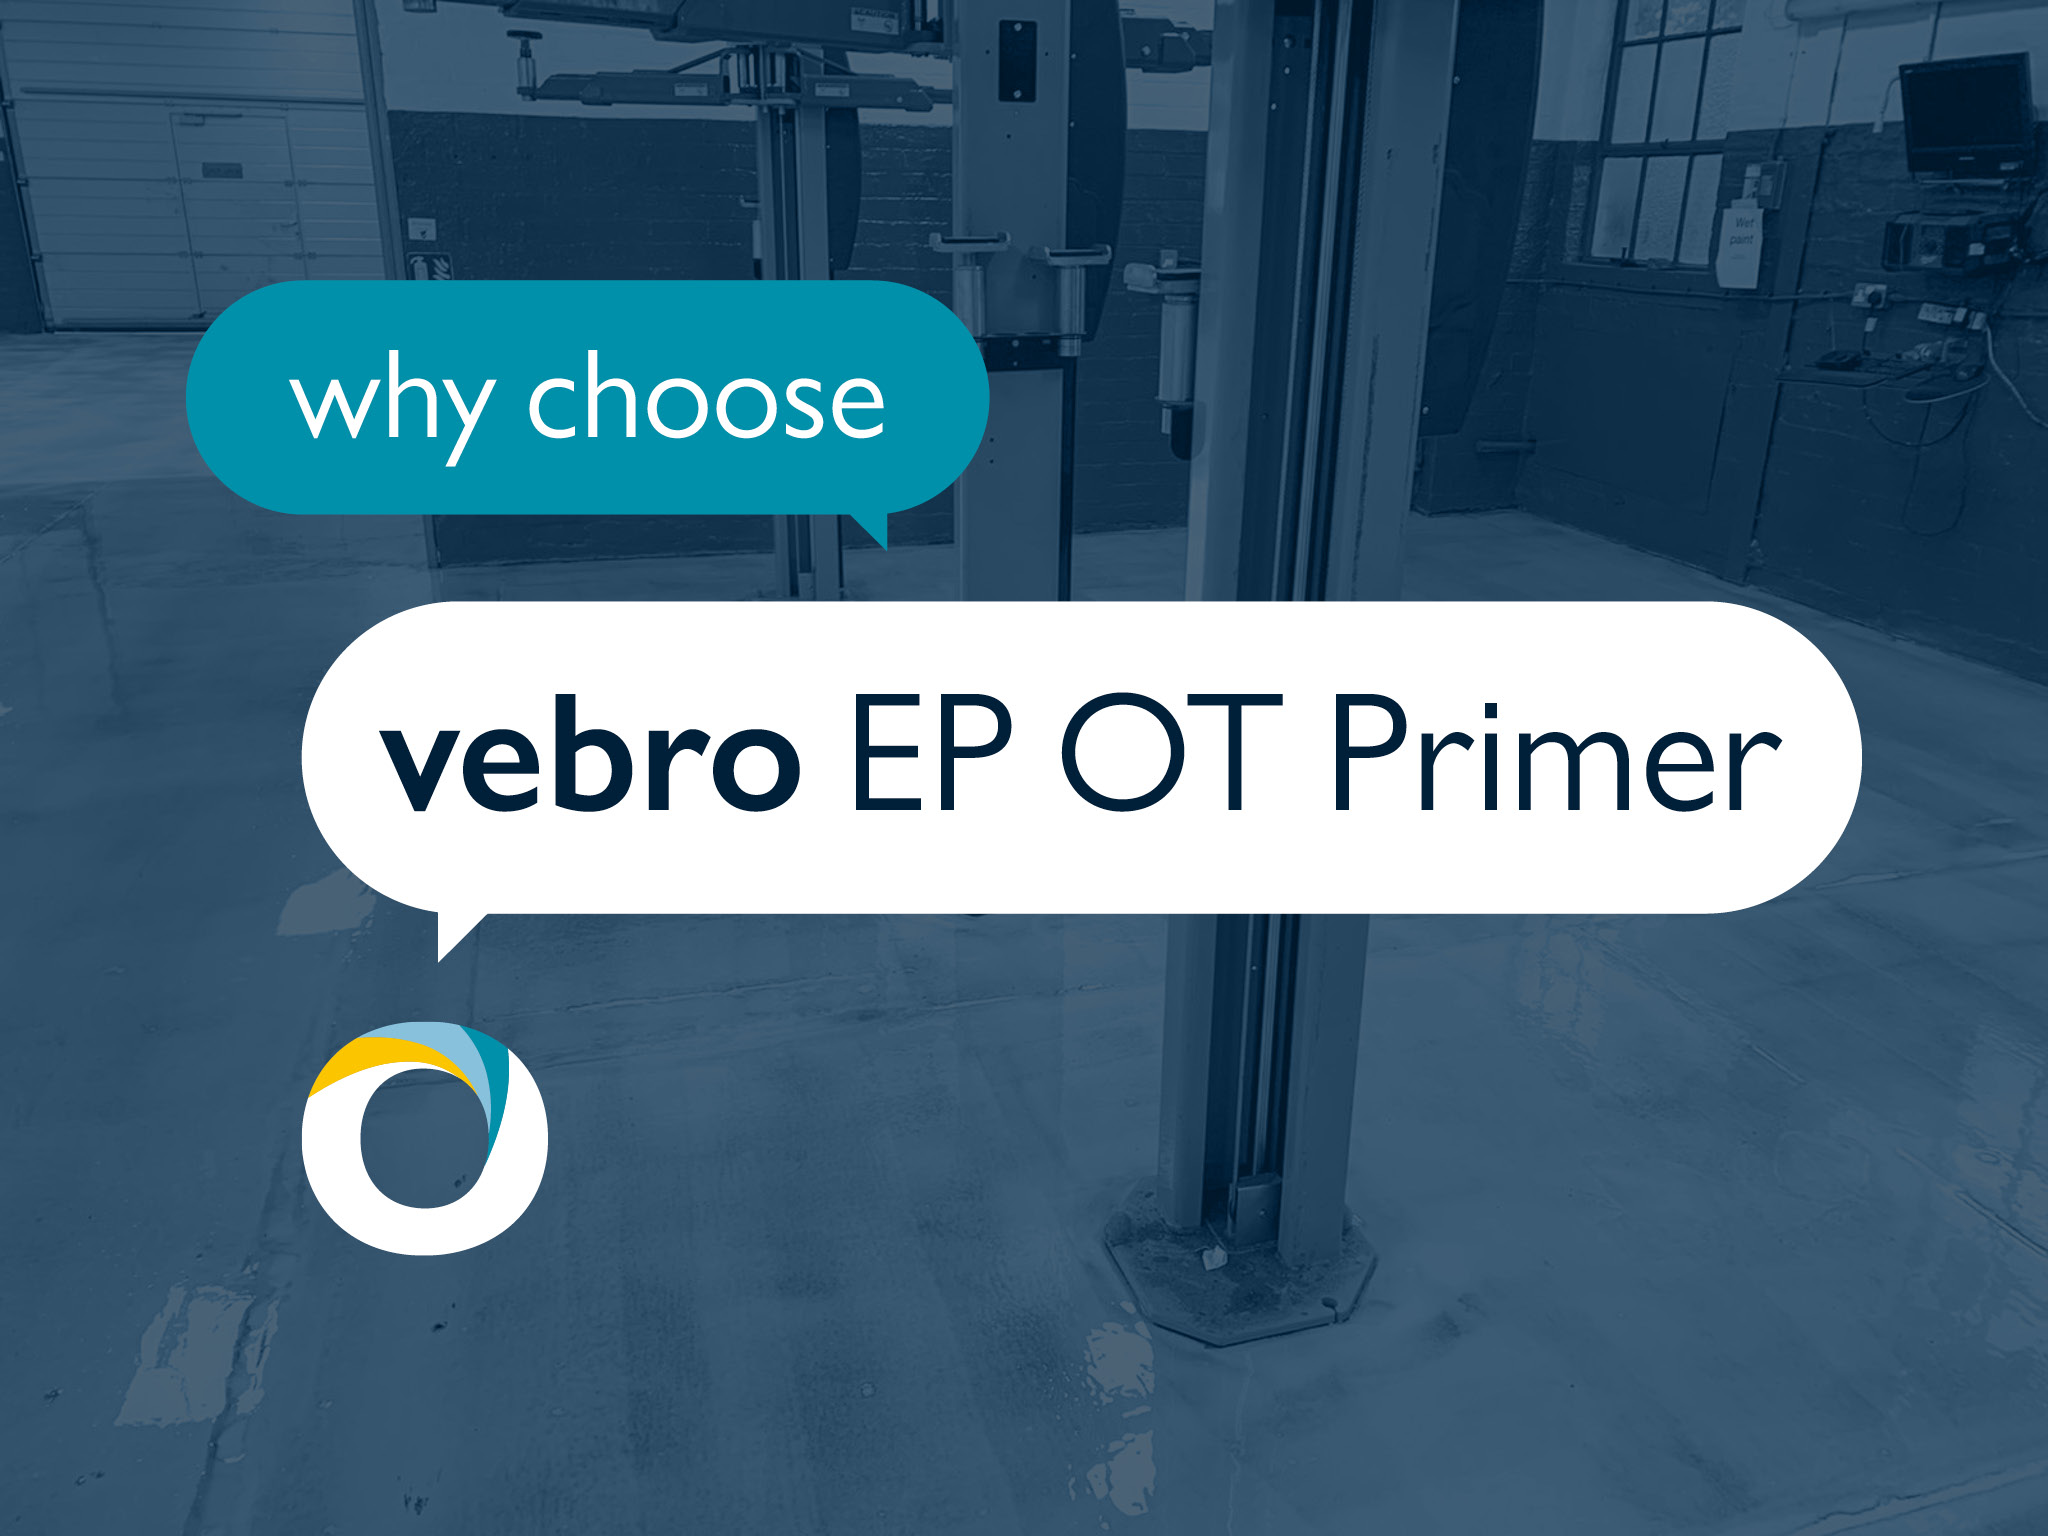 Why choose vebro EP OT Primer?